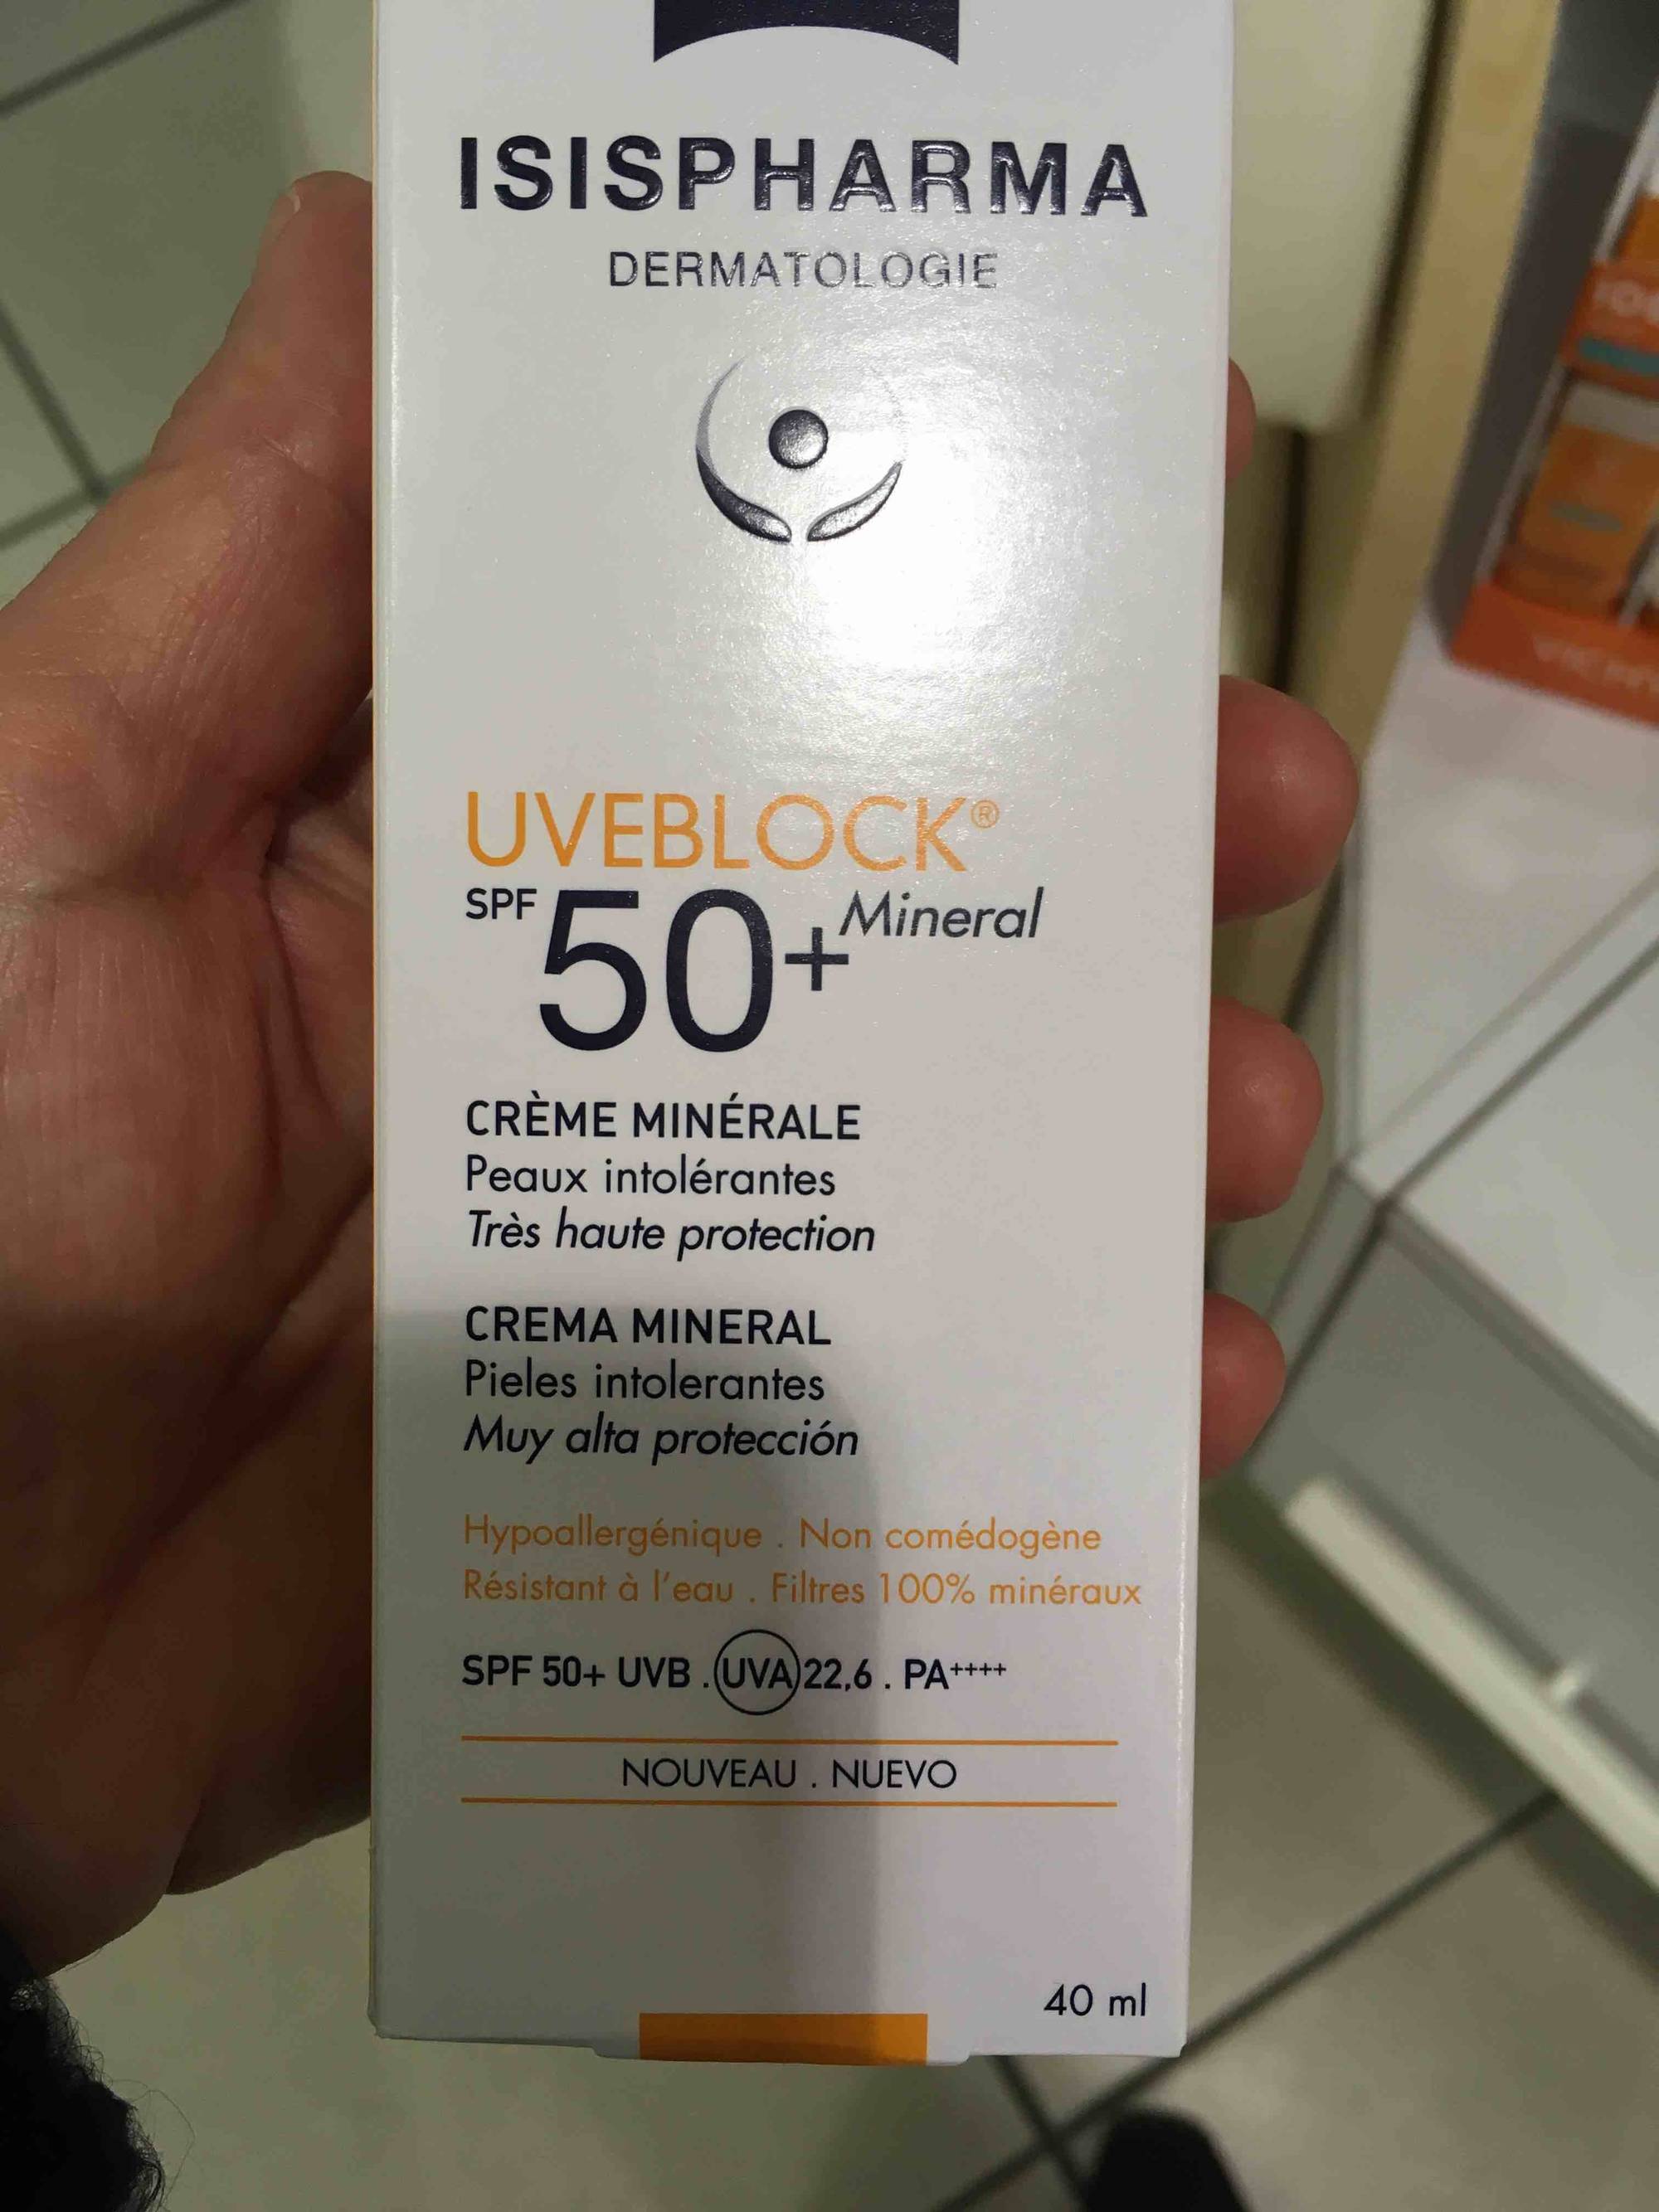 ISIS PHARMA - Uveblock SPF 50+ - Crème minérale